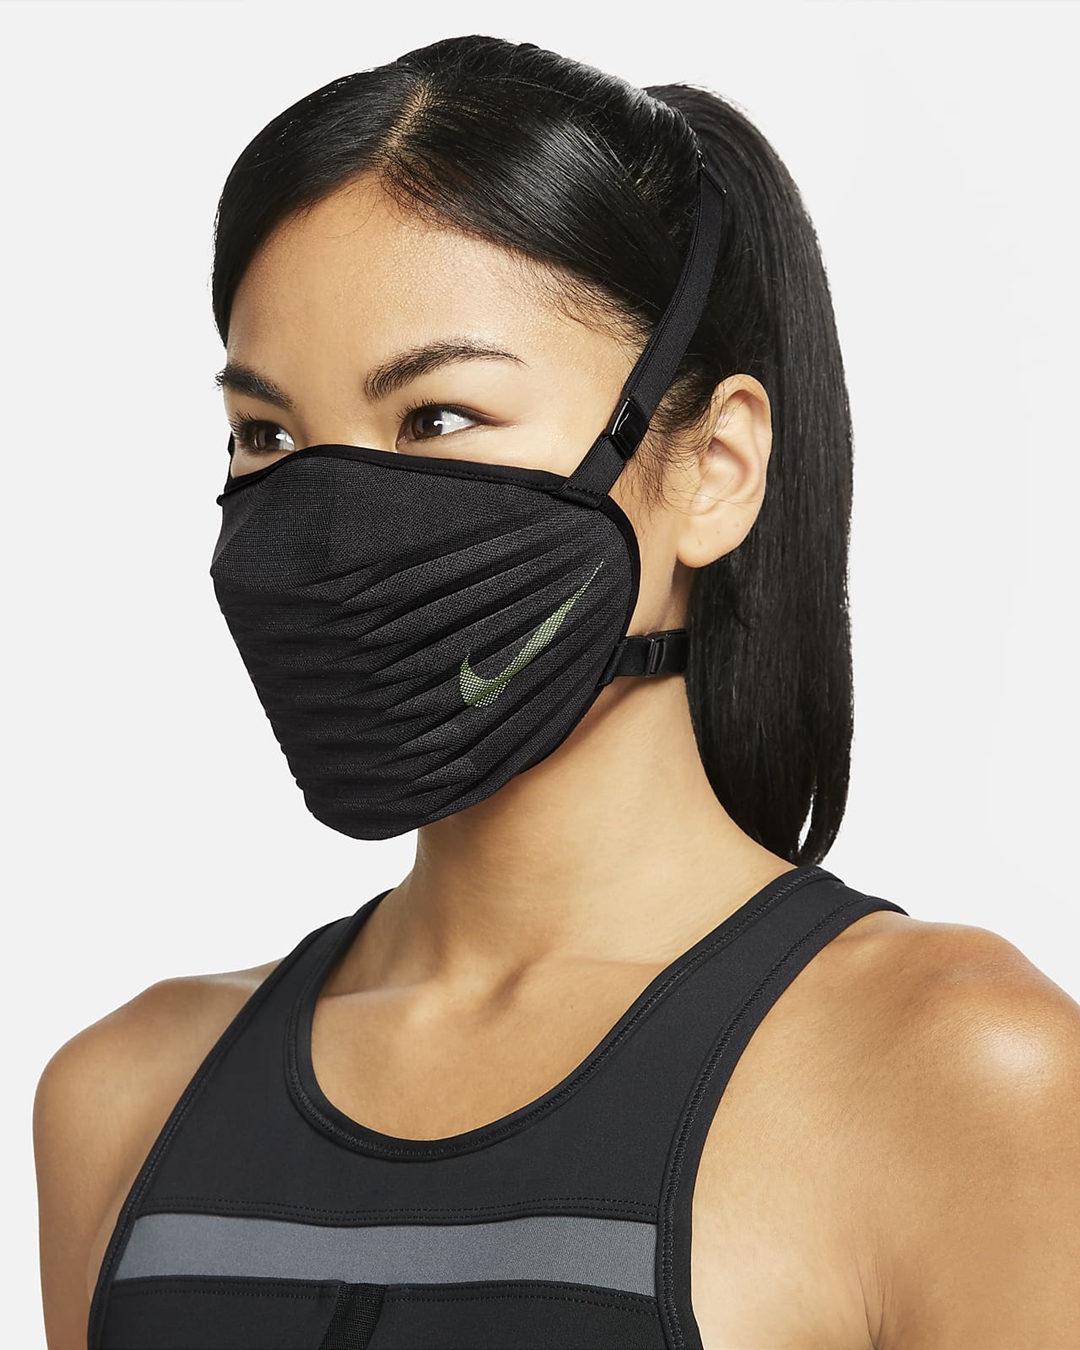 NIKE 史上初のストラップ付き高性能マスク「ナイキ ベンチュラー」が発売 (Venturer Performance Face Mask) [DO8356-010]